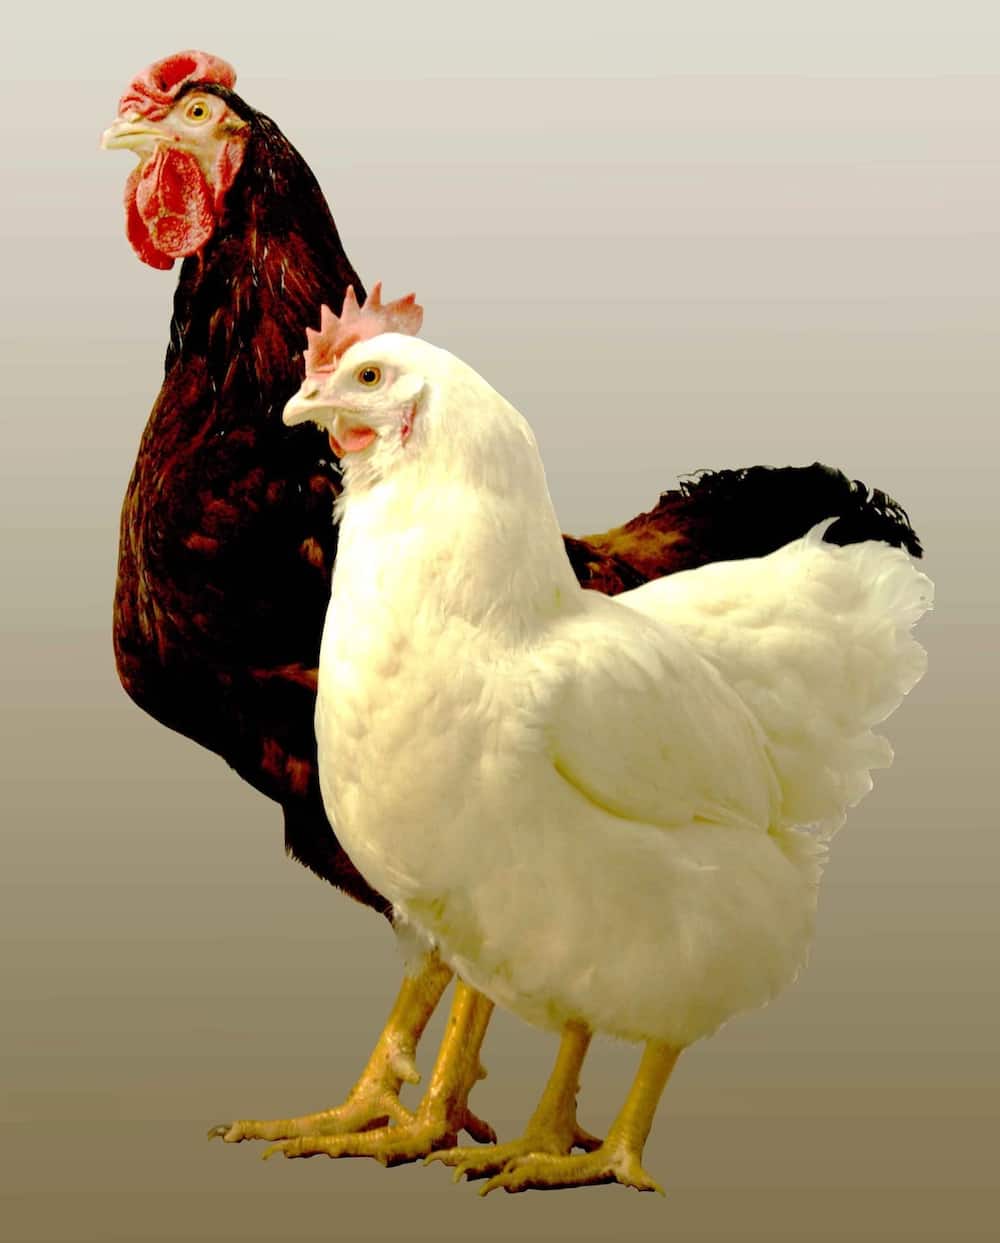 poultry keeping business plan in kenya